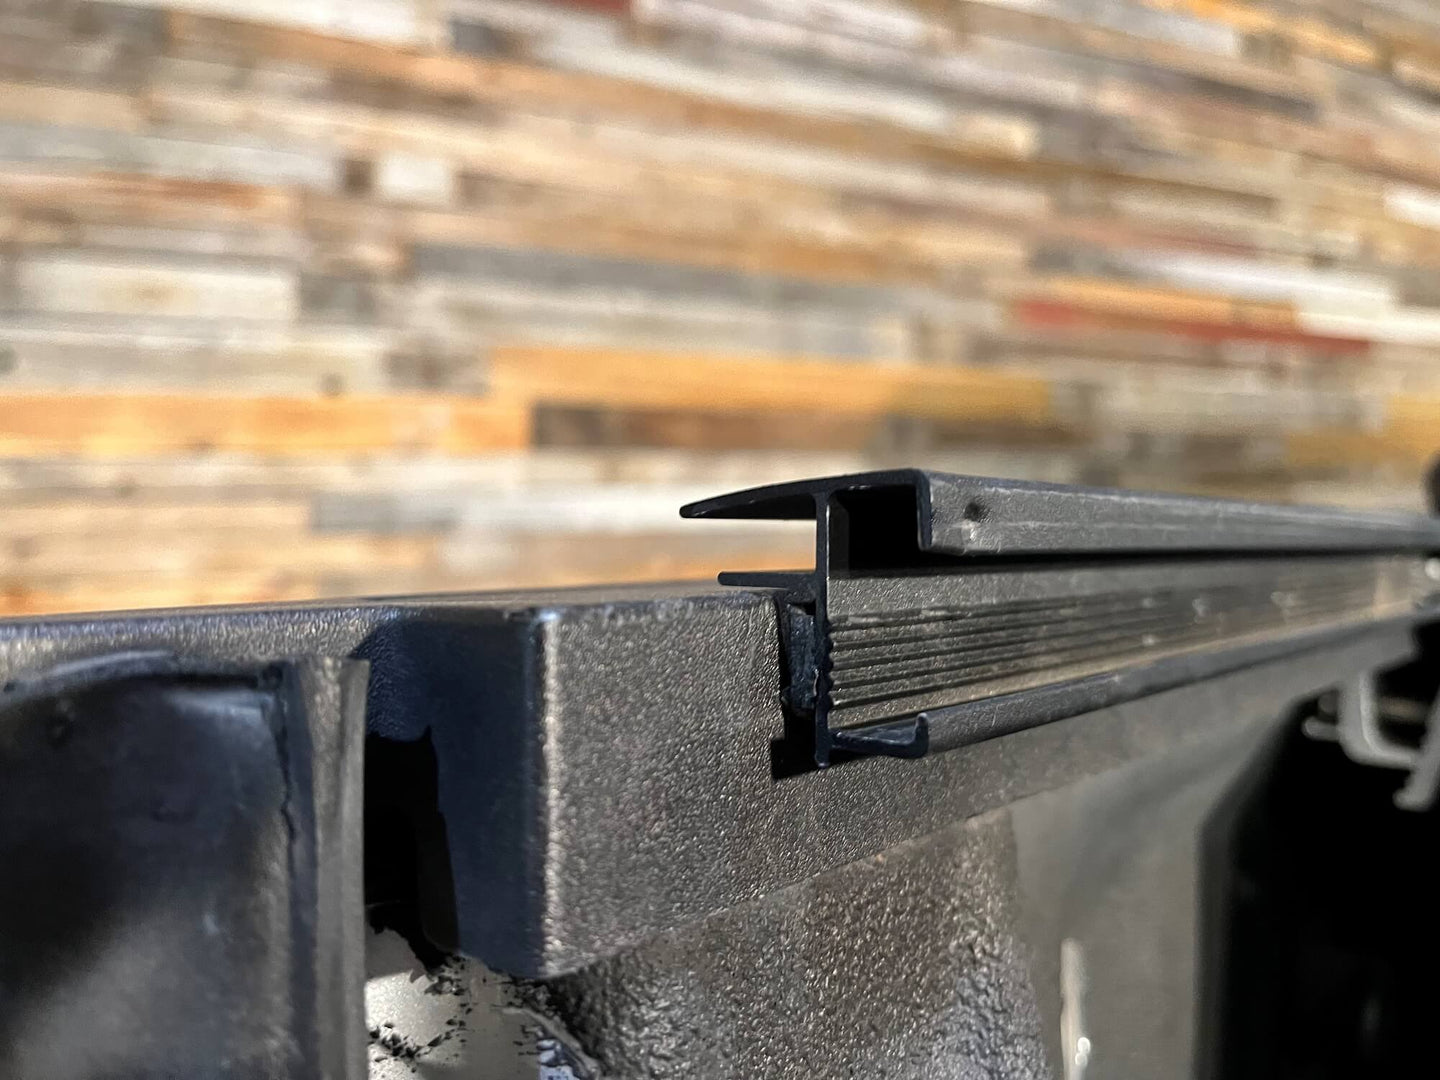 Sawtooth Stretch tonneau black aluminum side rails installed on Toyota Tundra pickup truck bed rails